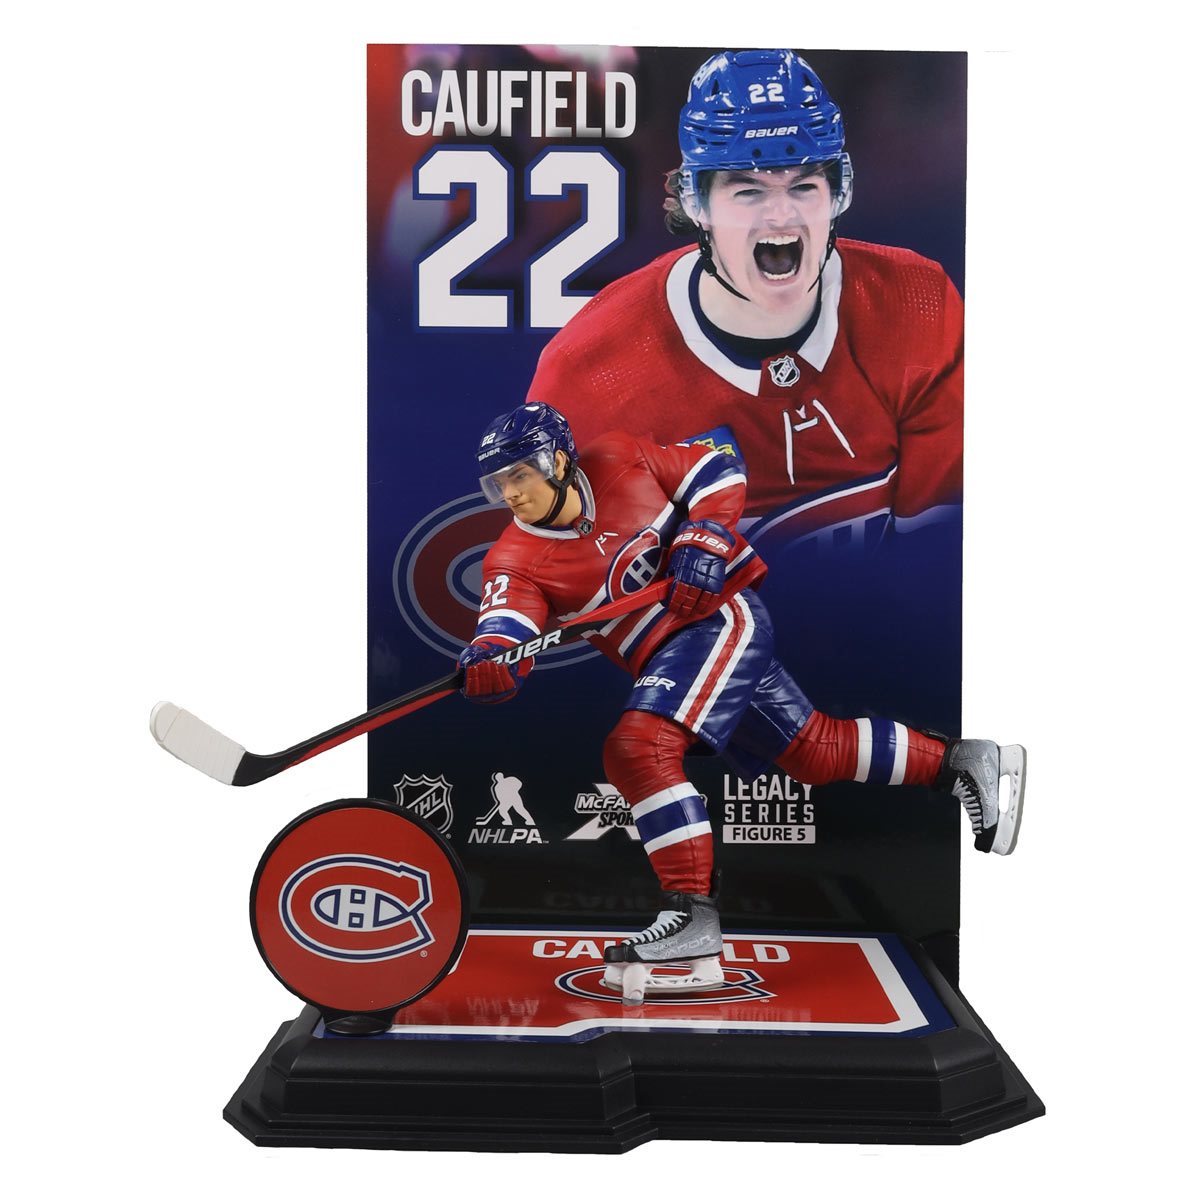 Cole Caufield Memorabilia, Cole Caufield Collectibles, NHL Cole Caufield  Signed Gear